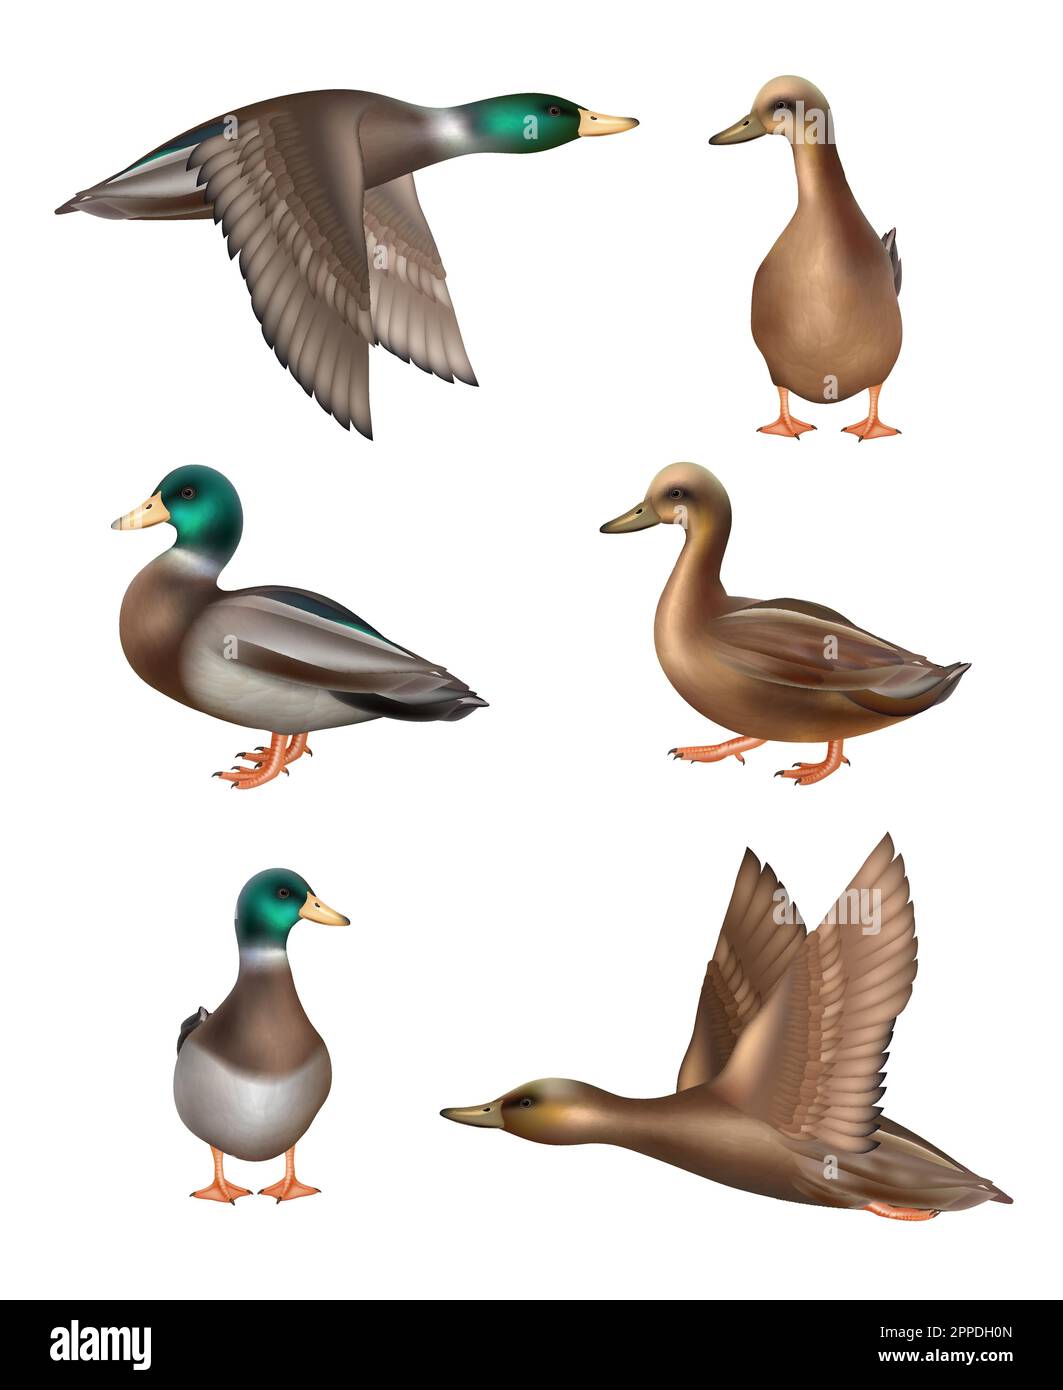 Ducks. Flying birds in wild nature decent vector realistic illustrations of ducks in different poses Stock Vector